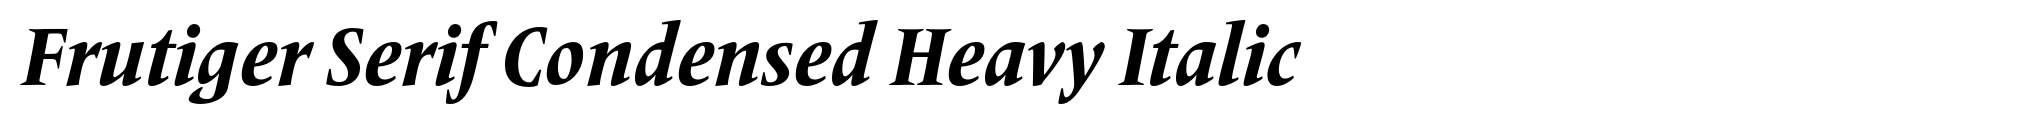 Frutiger Serif Condensed Heavy Italic image